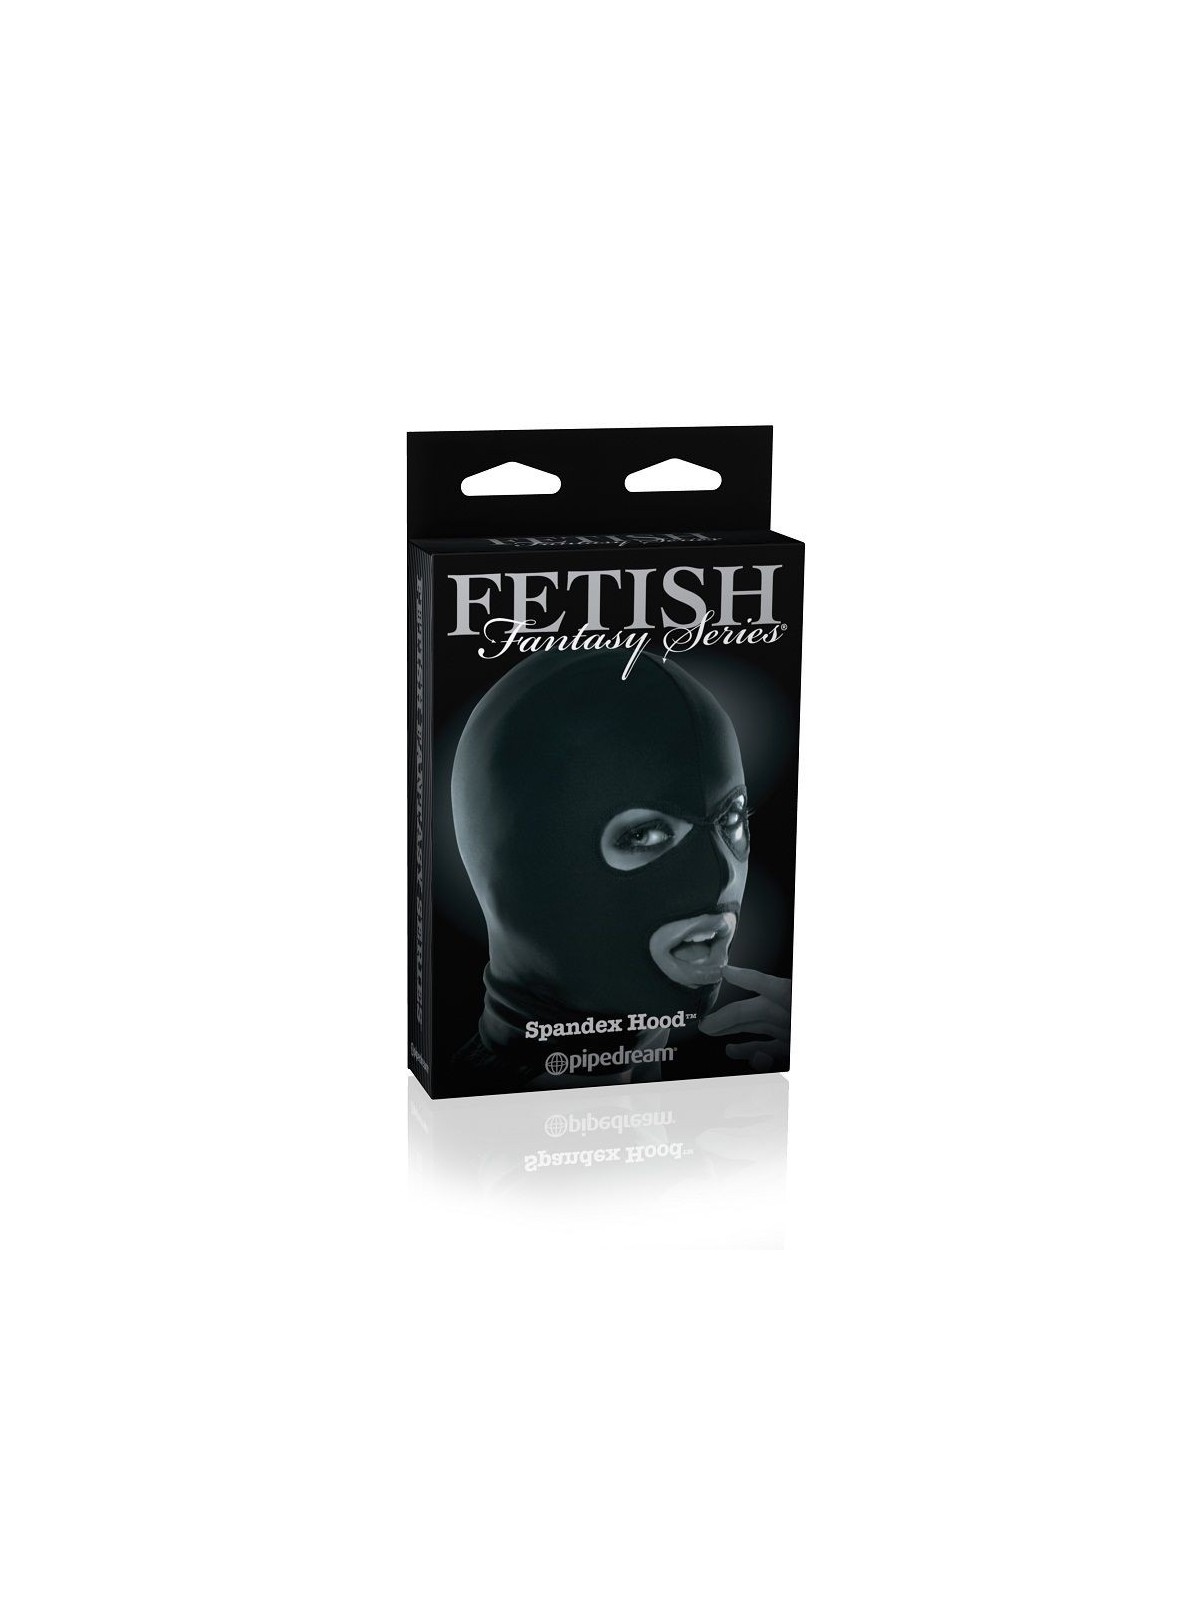 Fetish Fantasy Edición Limitada Mascara Con 3 Aberturas - Comprar Máscara erótica Fetish Fantasy - Máscaras eróticas (1)